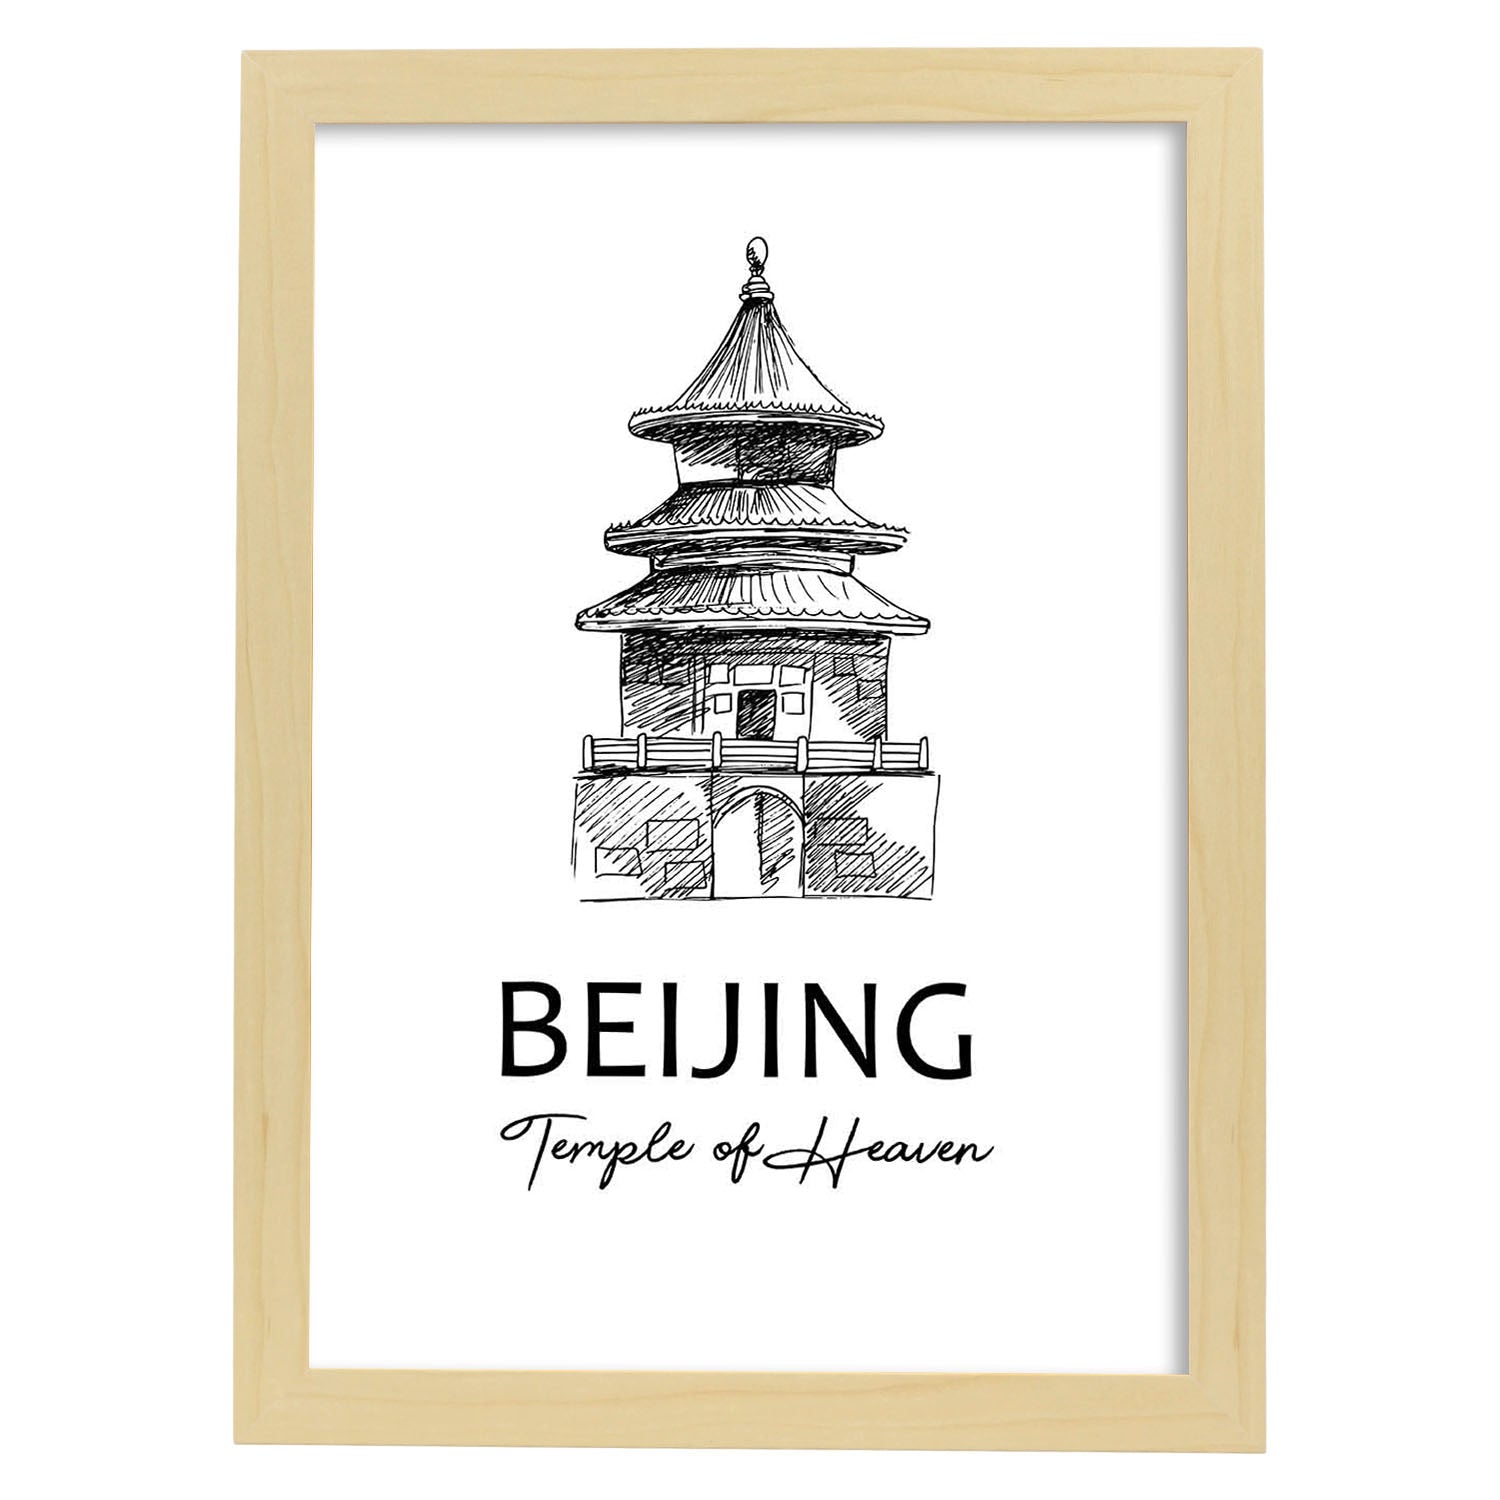 Poster de Beijing - Templo del cielo. Láminas con monumentos de ciudades.-Artwork-Nacnic-A4-Marco Madera clara-Nacnic Estudio SL